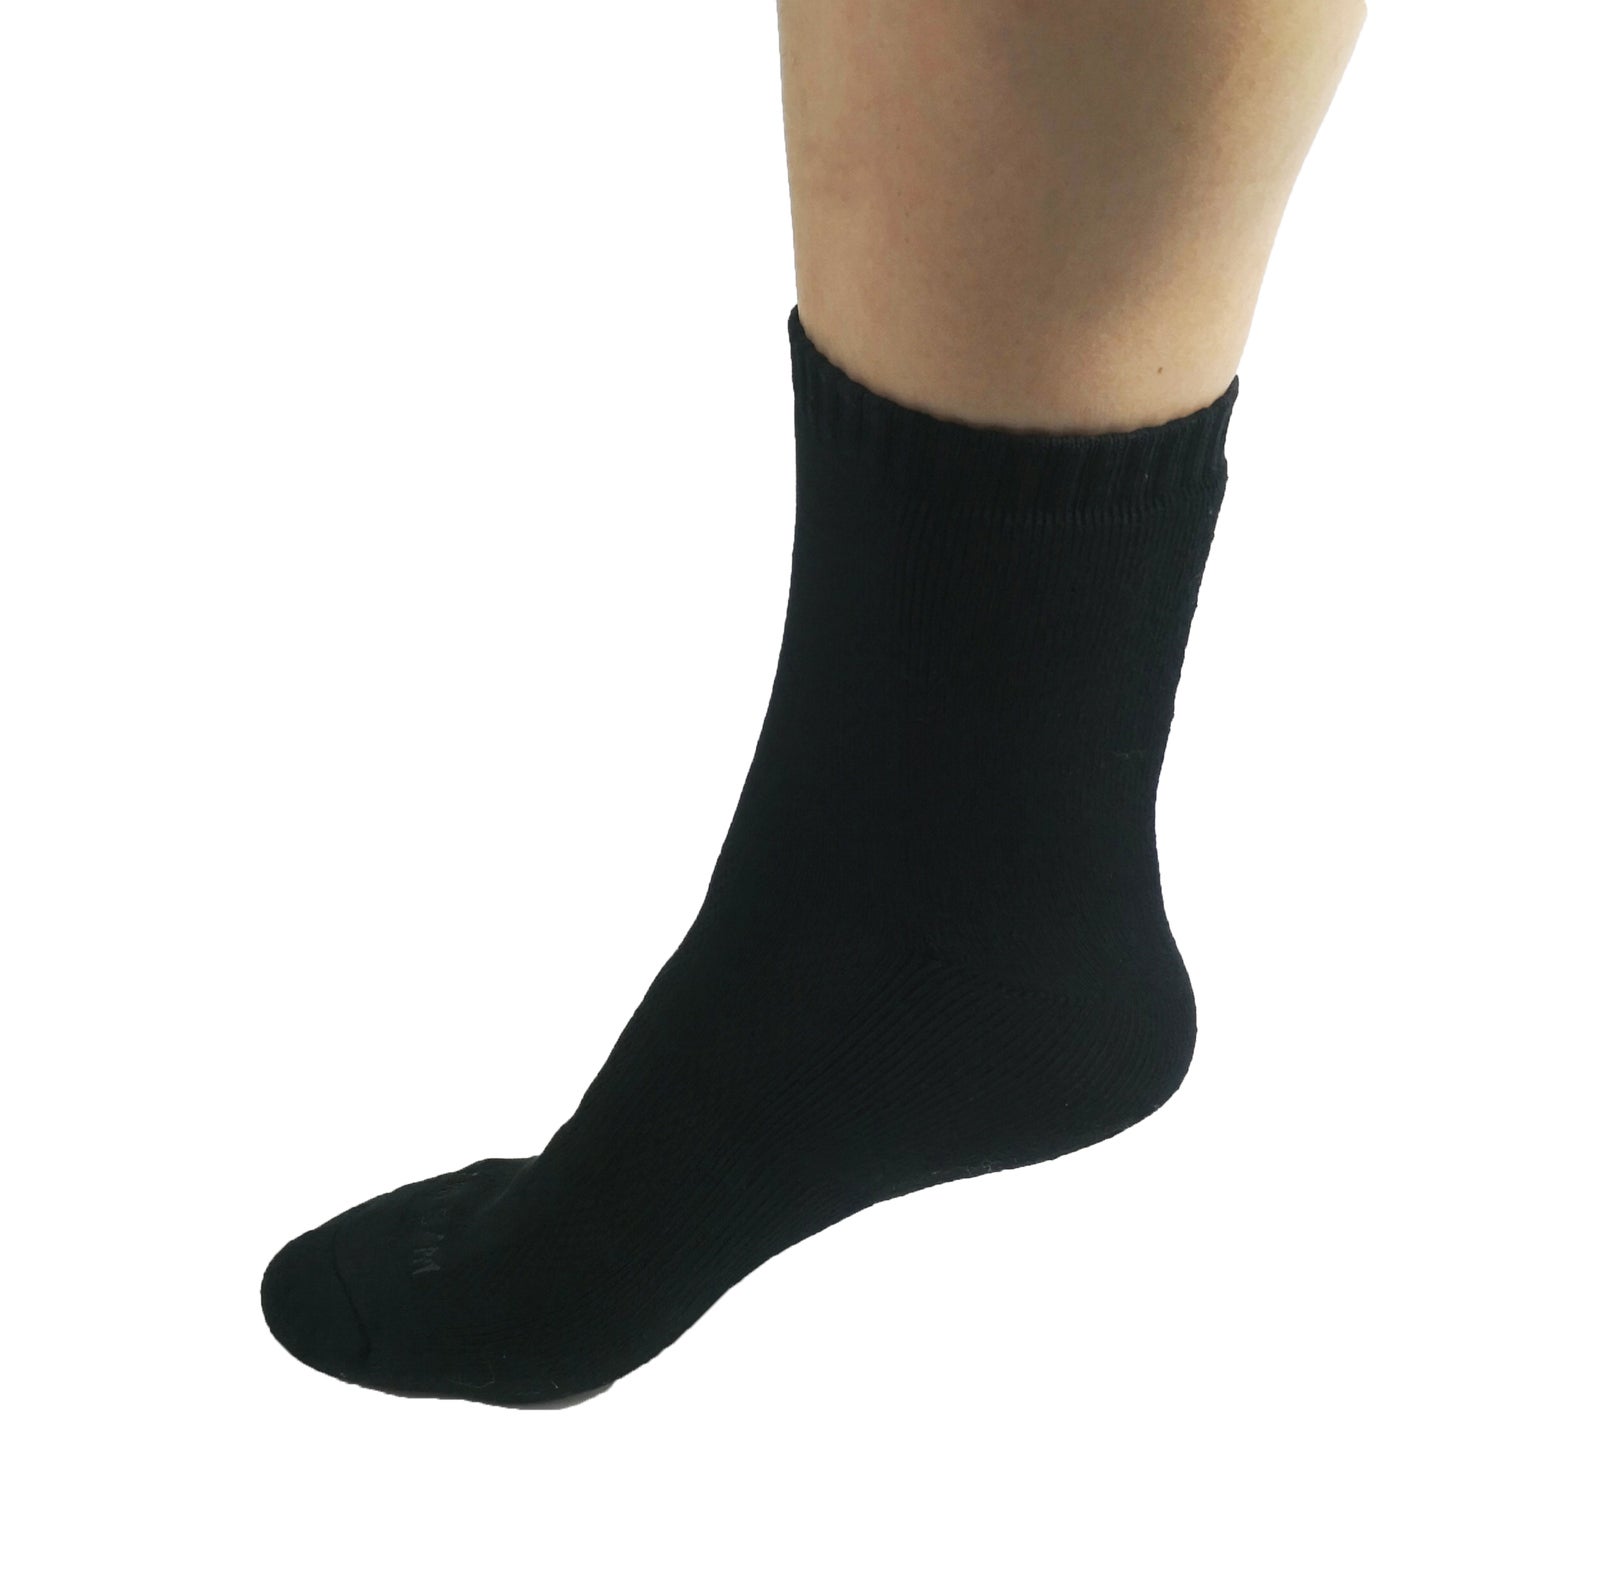 AXIGN Medical Circulation Socks Diabetic Socks - Black | Buy Men's ...